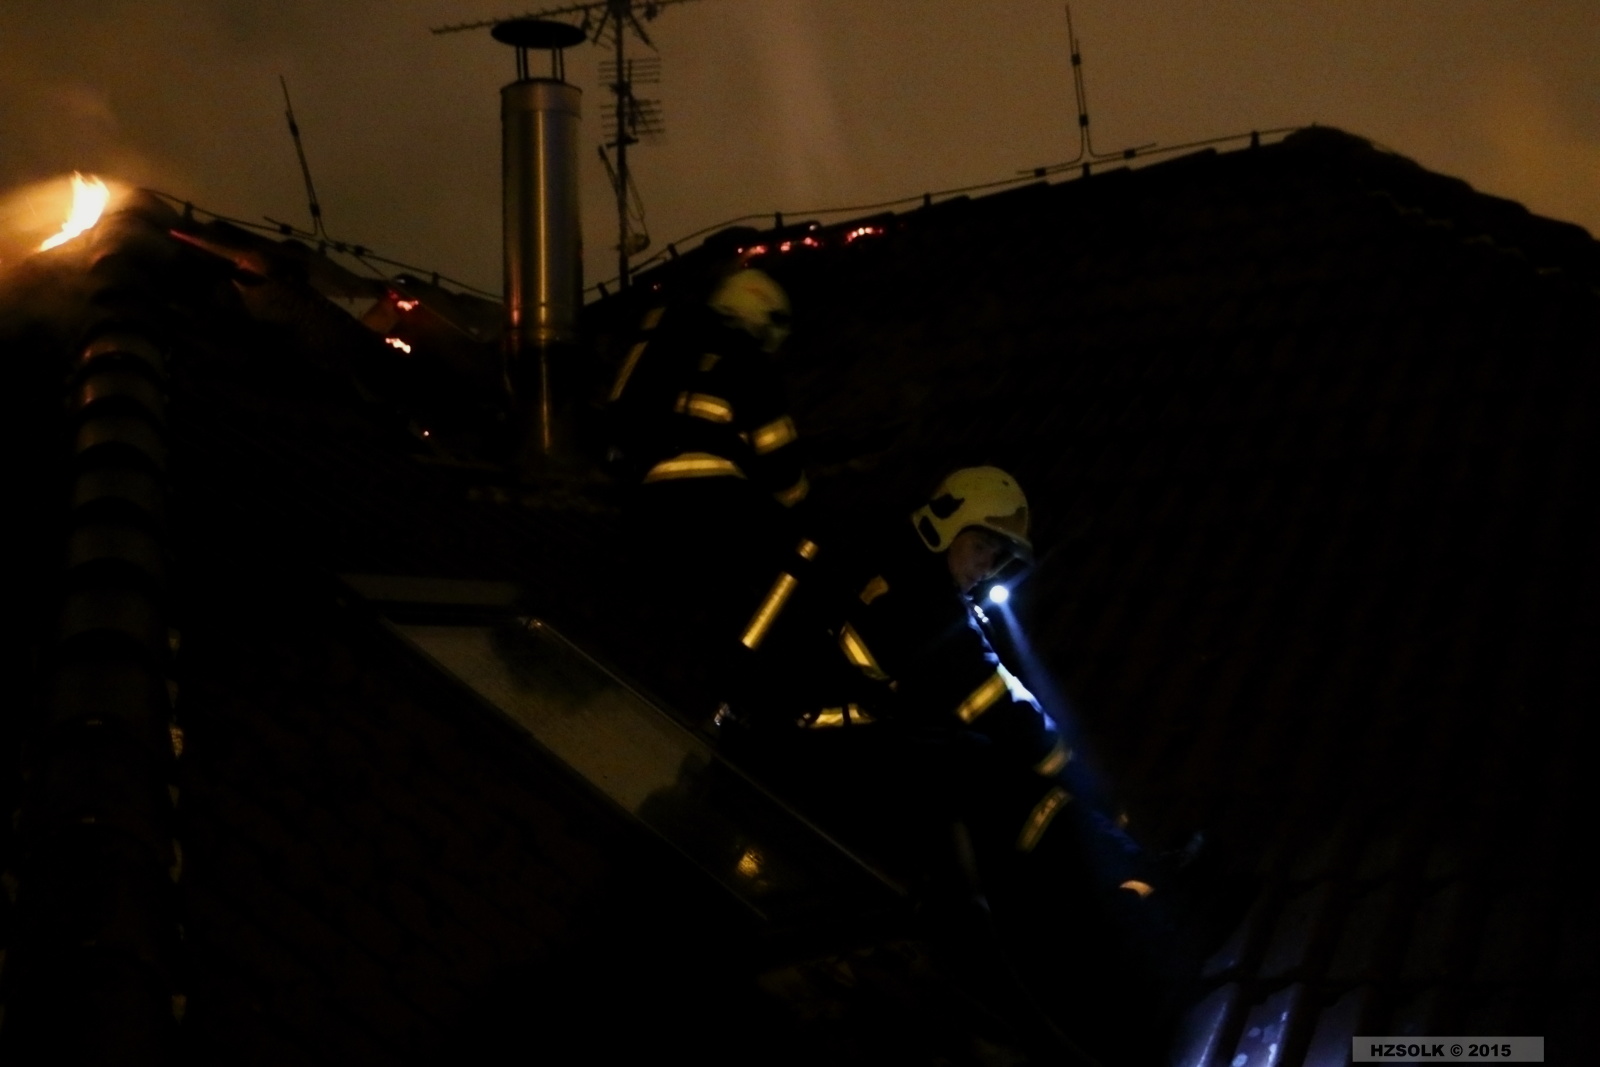 25 P_NB_3-5-2015 požár střechy RD Olomouc Neředín (9).JPG